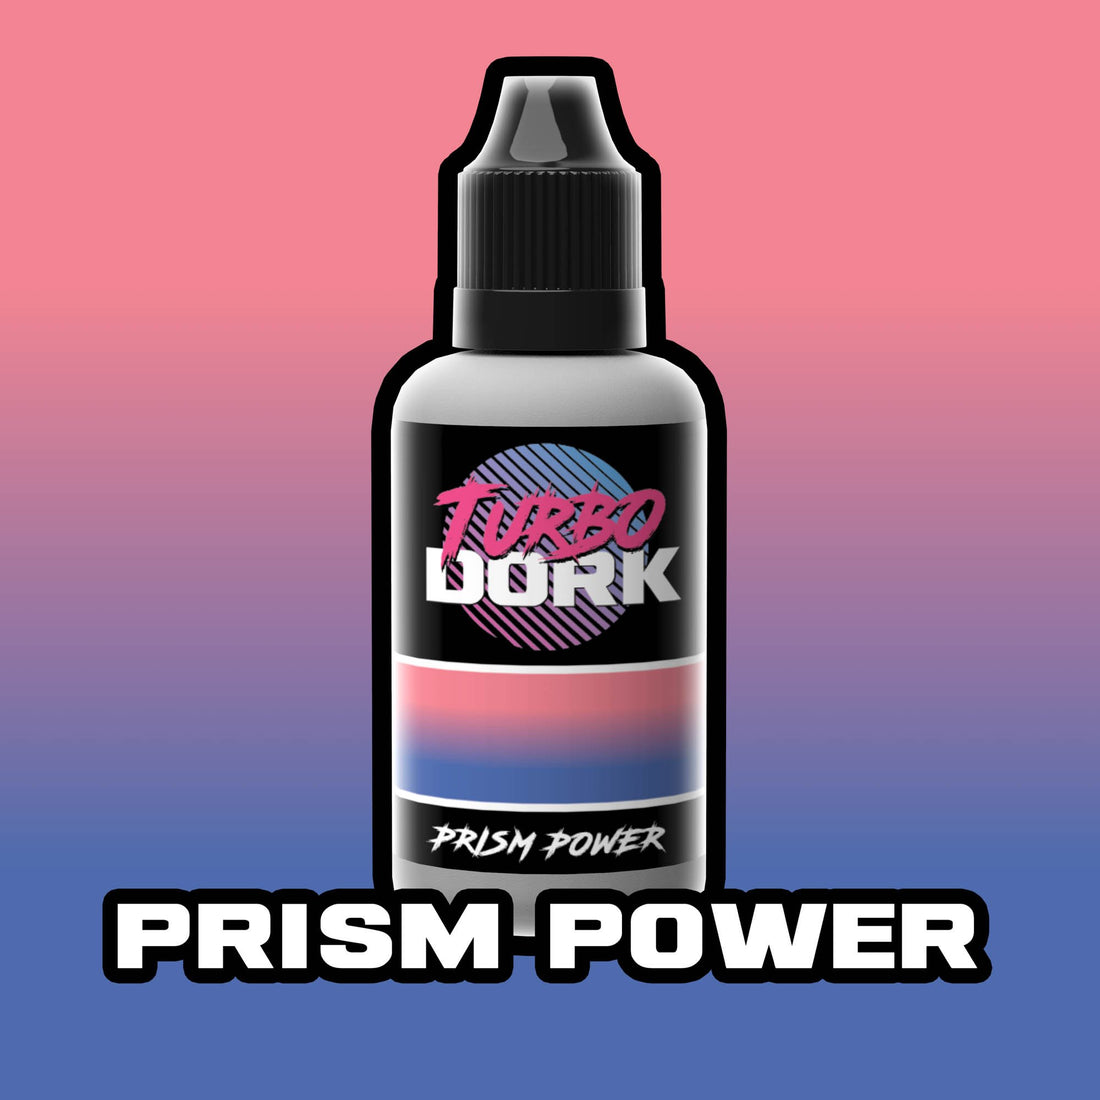 Turbodork Paint: Prism Power Turboshift